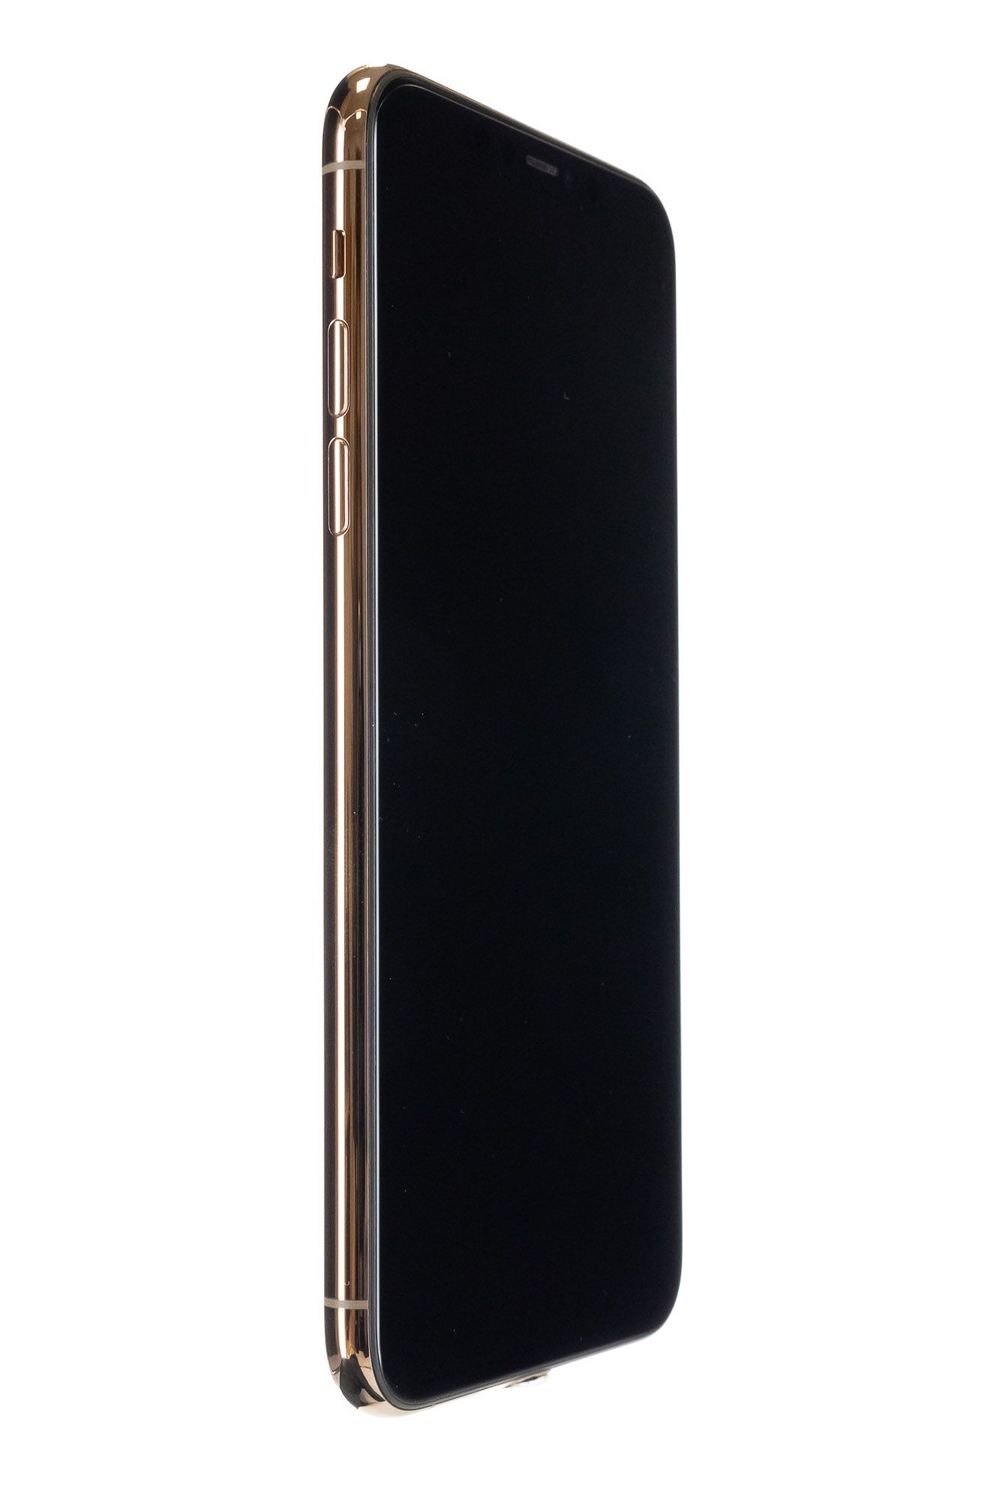 Telefon mobil Apple iPhone 11 Pro Max, Gold, 512 GB, Bun